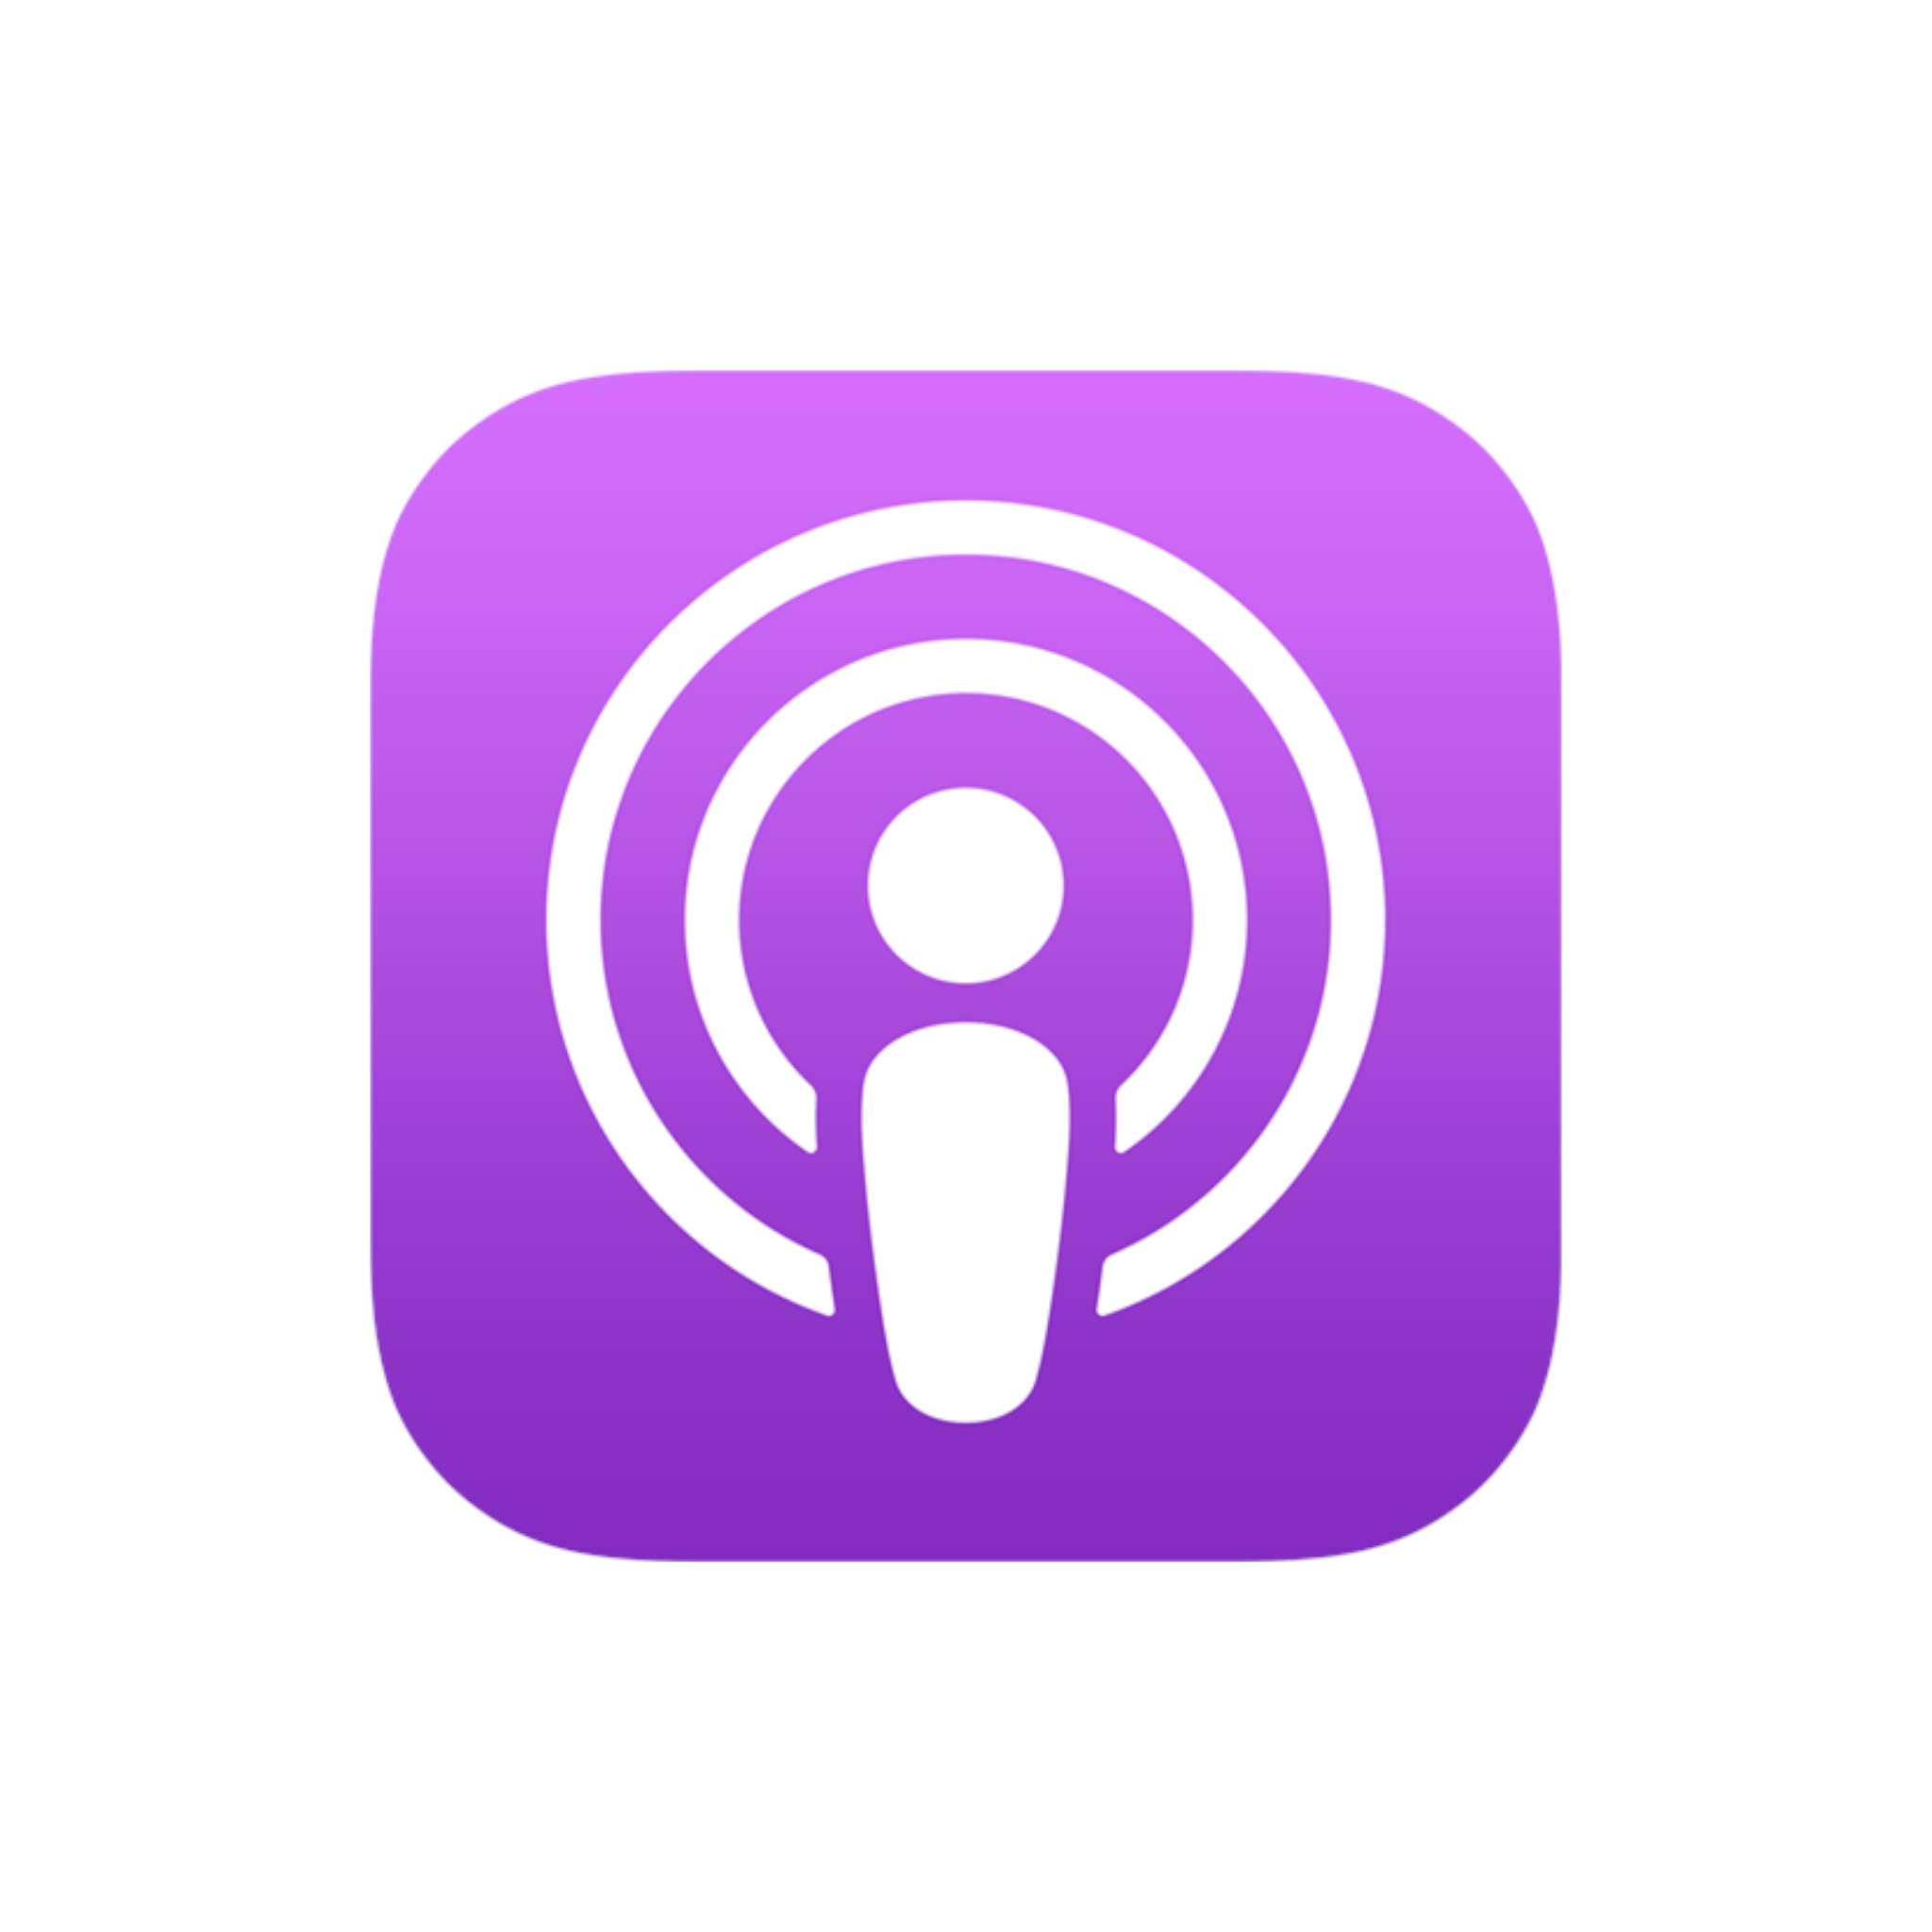 Apple Podcast logo in purple